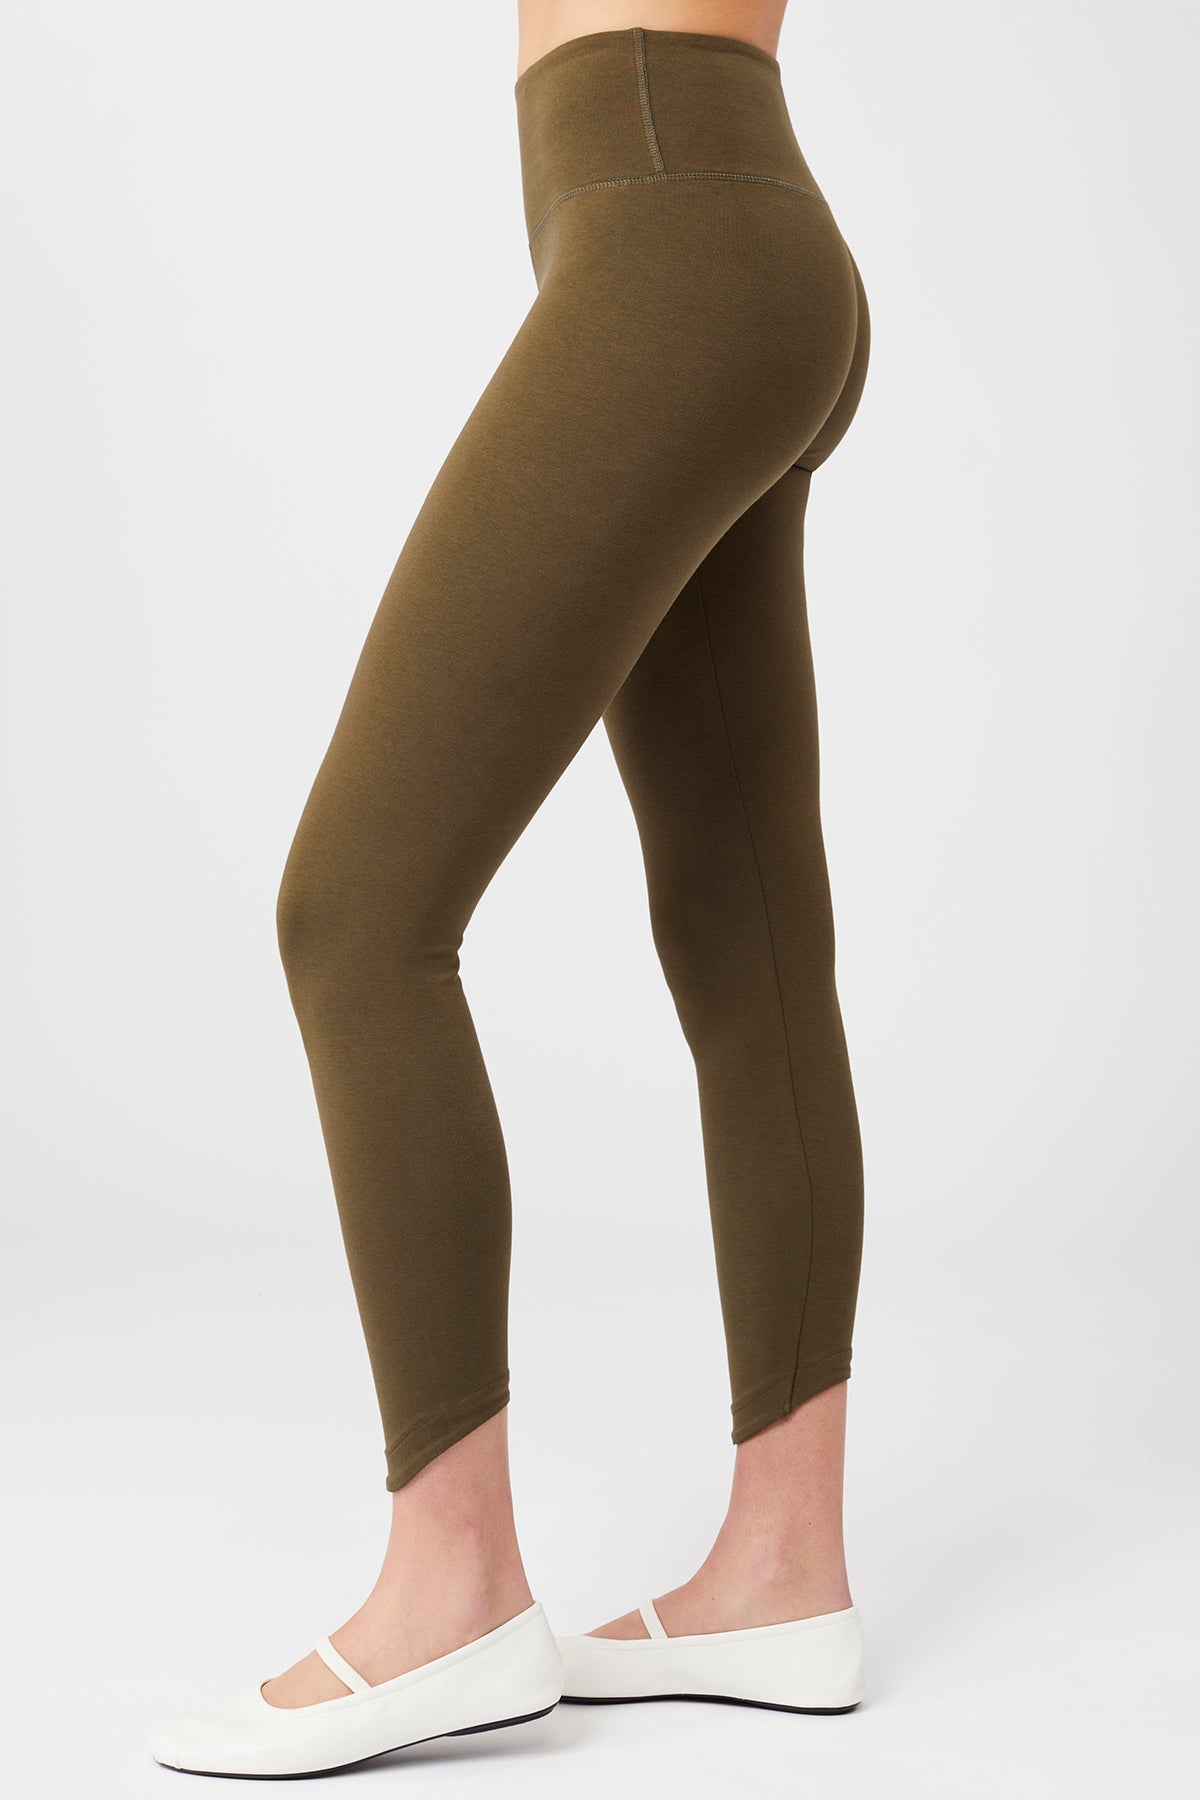 Buy White Leggings for Women by DSP TRENDS Online | Ajio.com